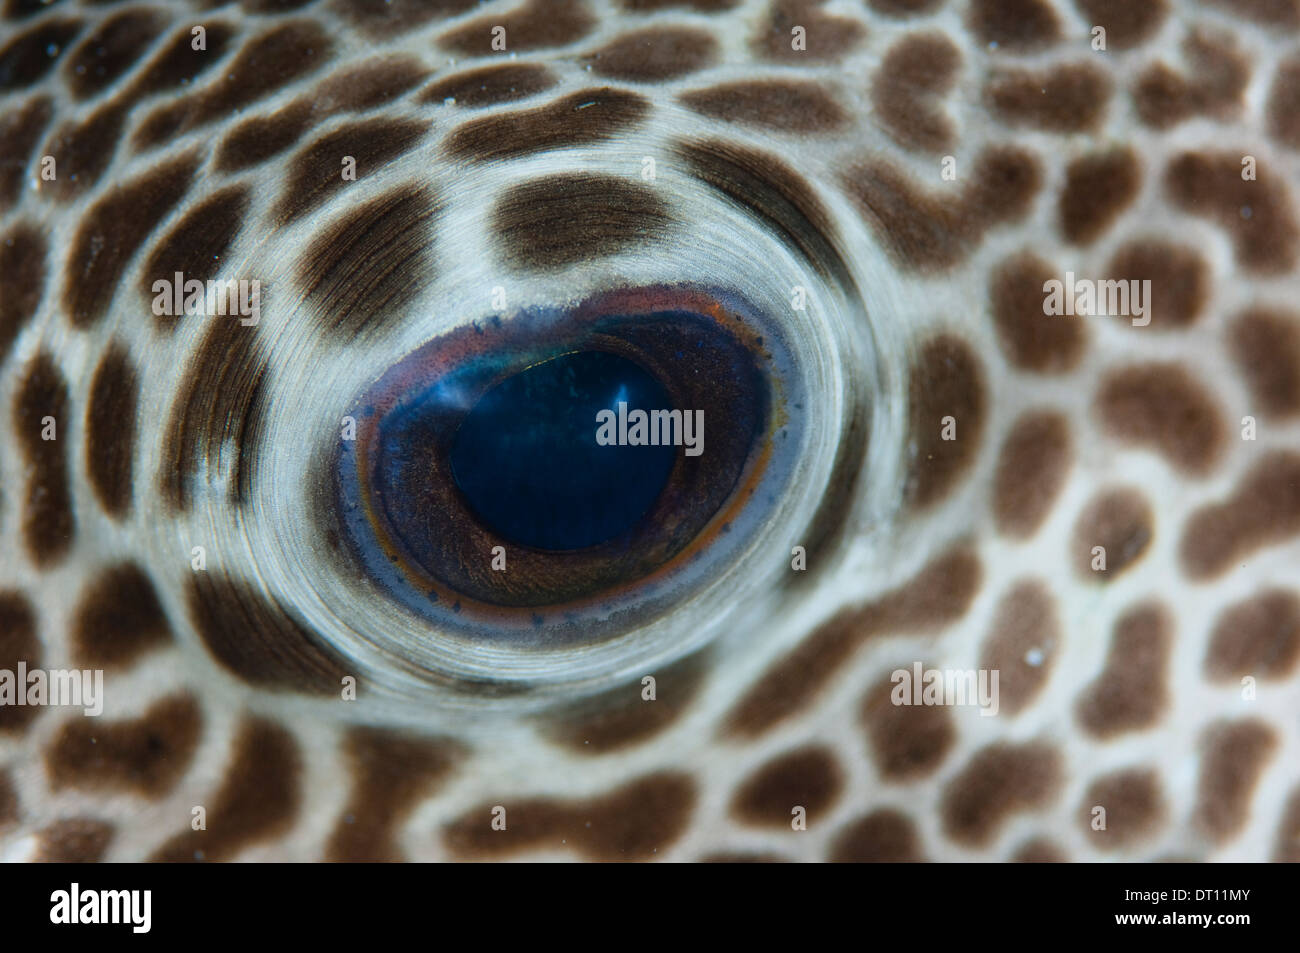 Starry Pufferfish, Arothron stellatus, full frame cerca del ojo detalle, Halmahera, Islas Molucas, Indonesia Foto de stock